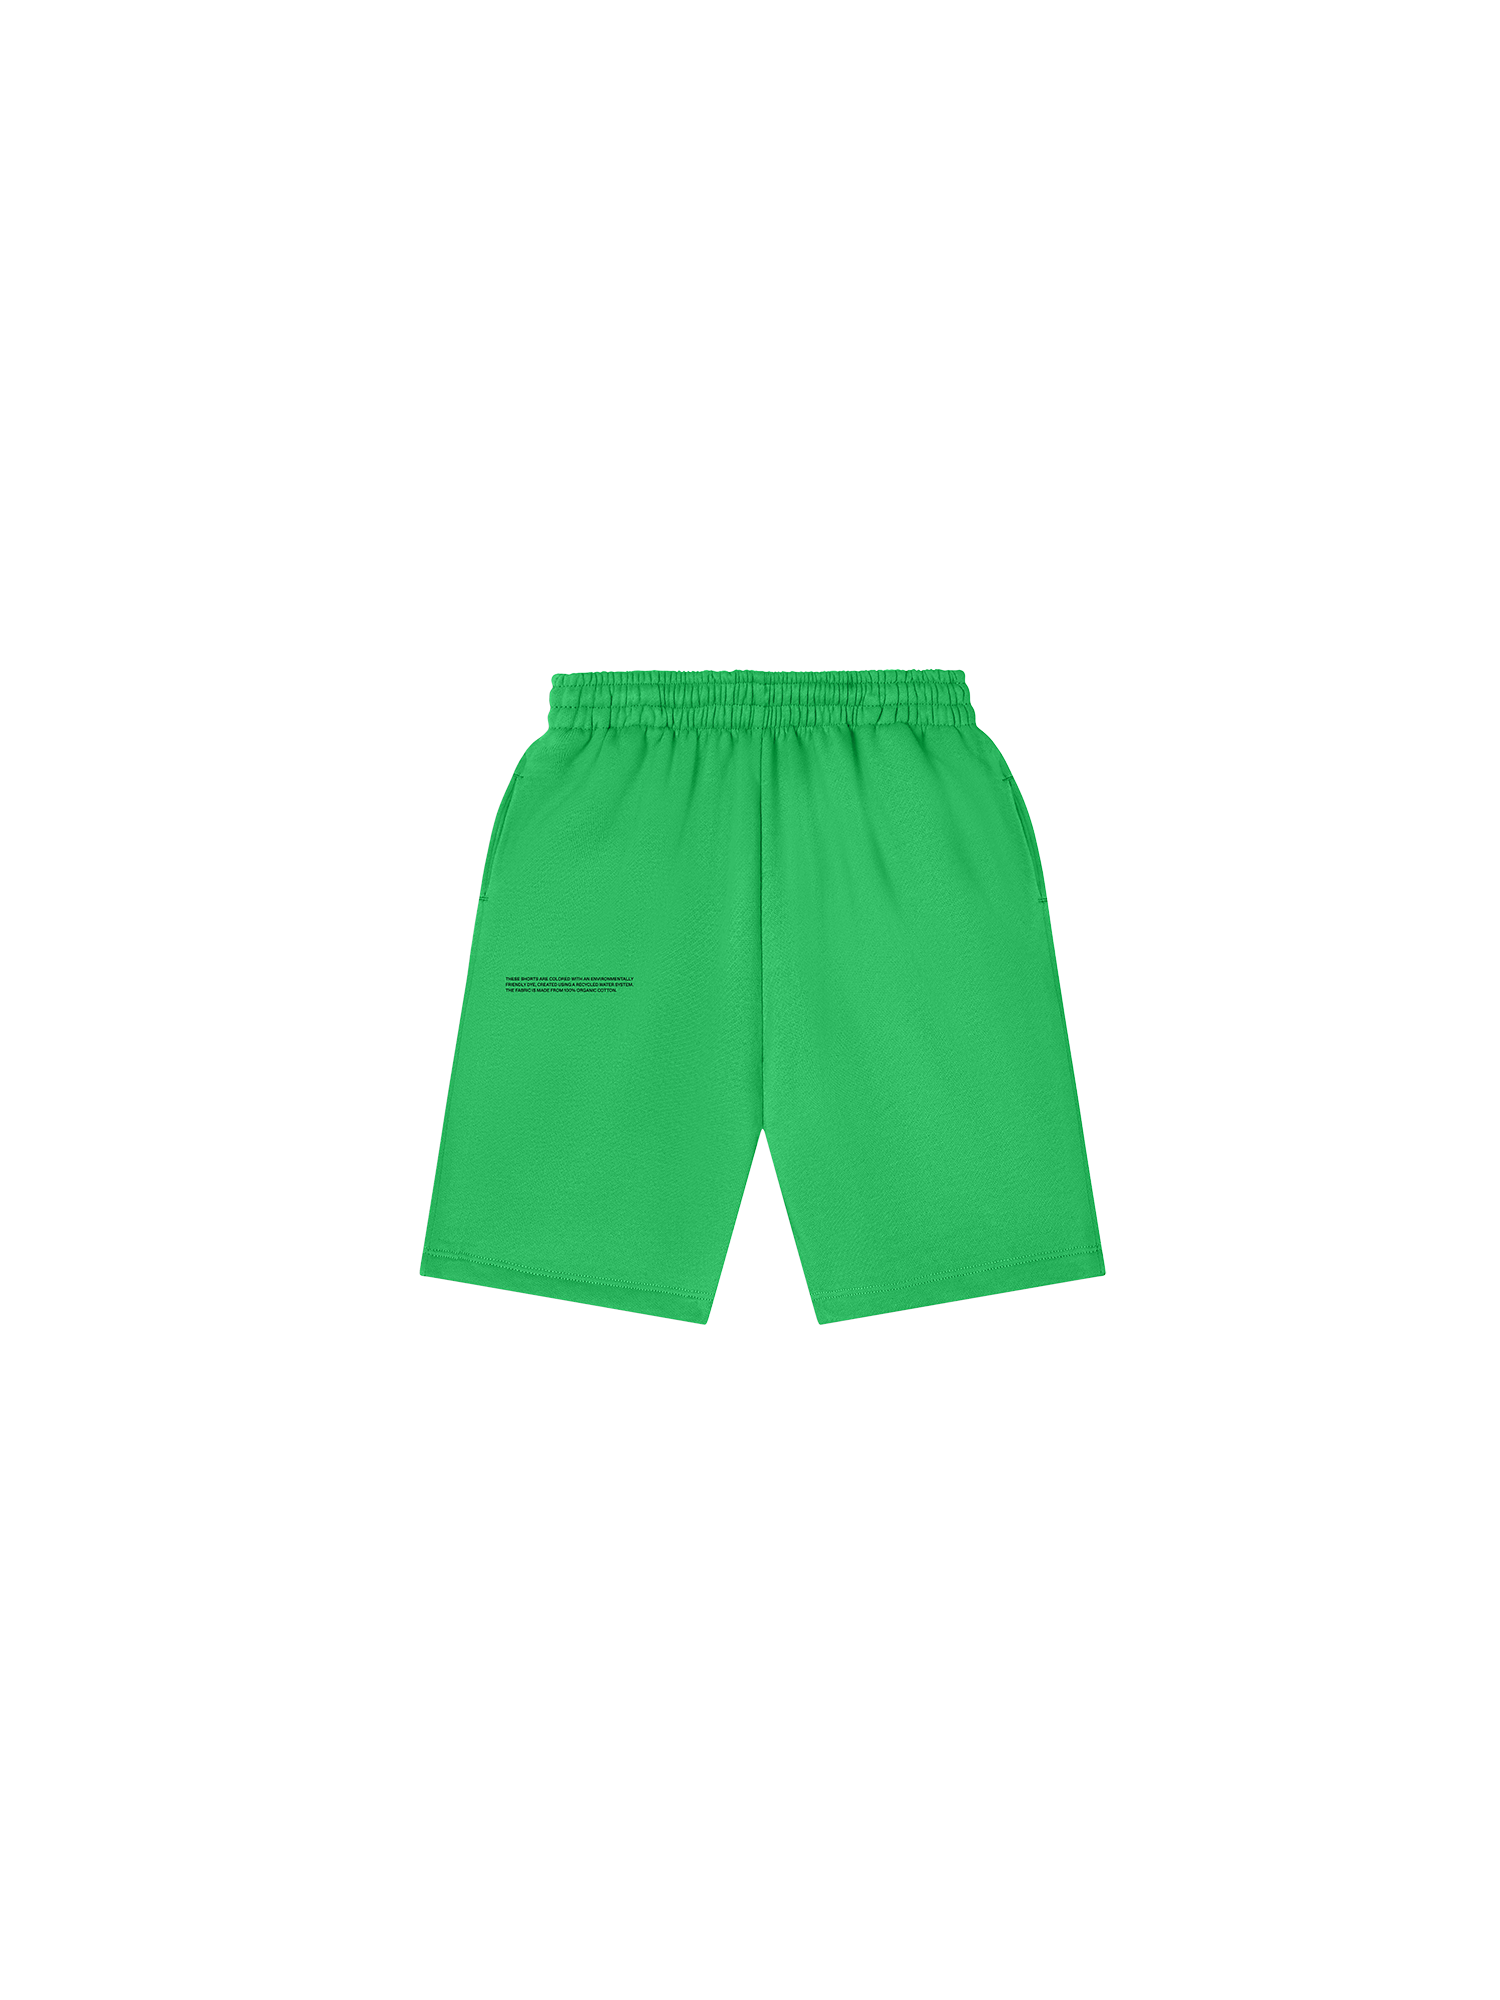 Kids 365 Long Shorts Core—jade green packshot-3